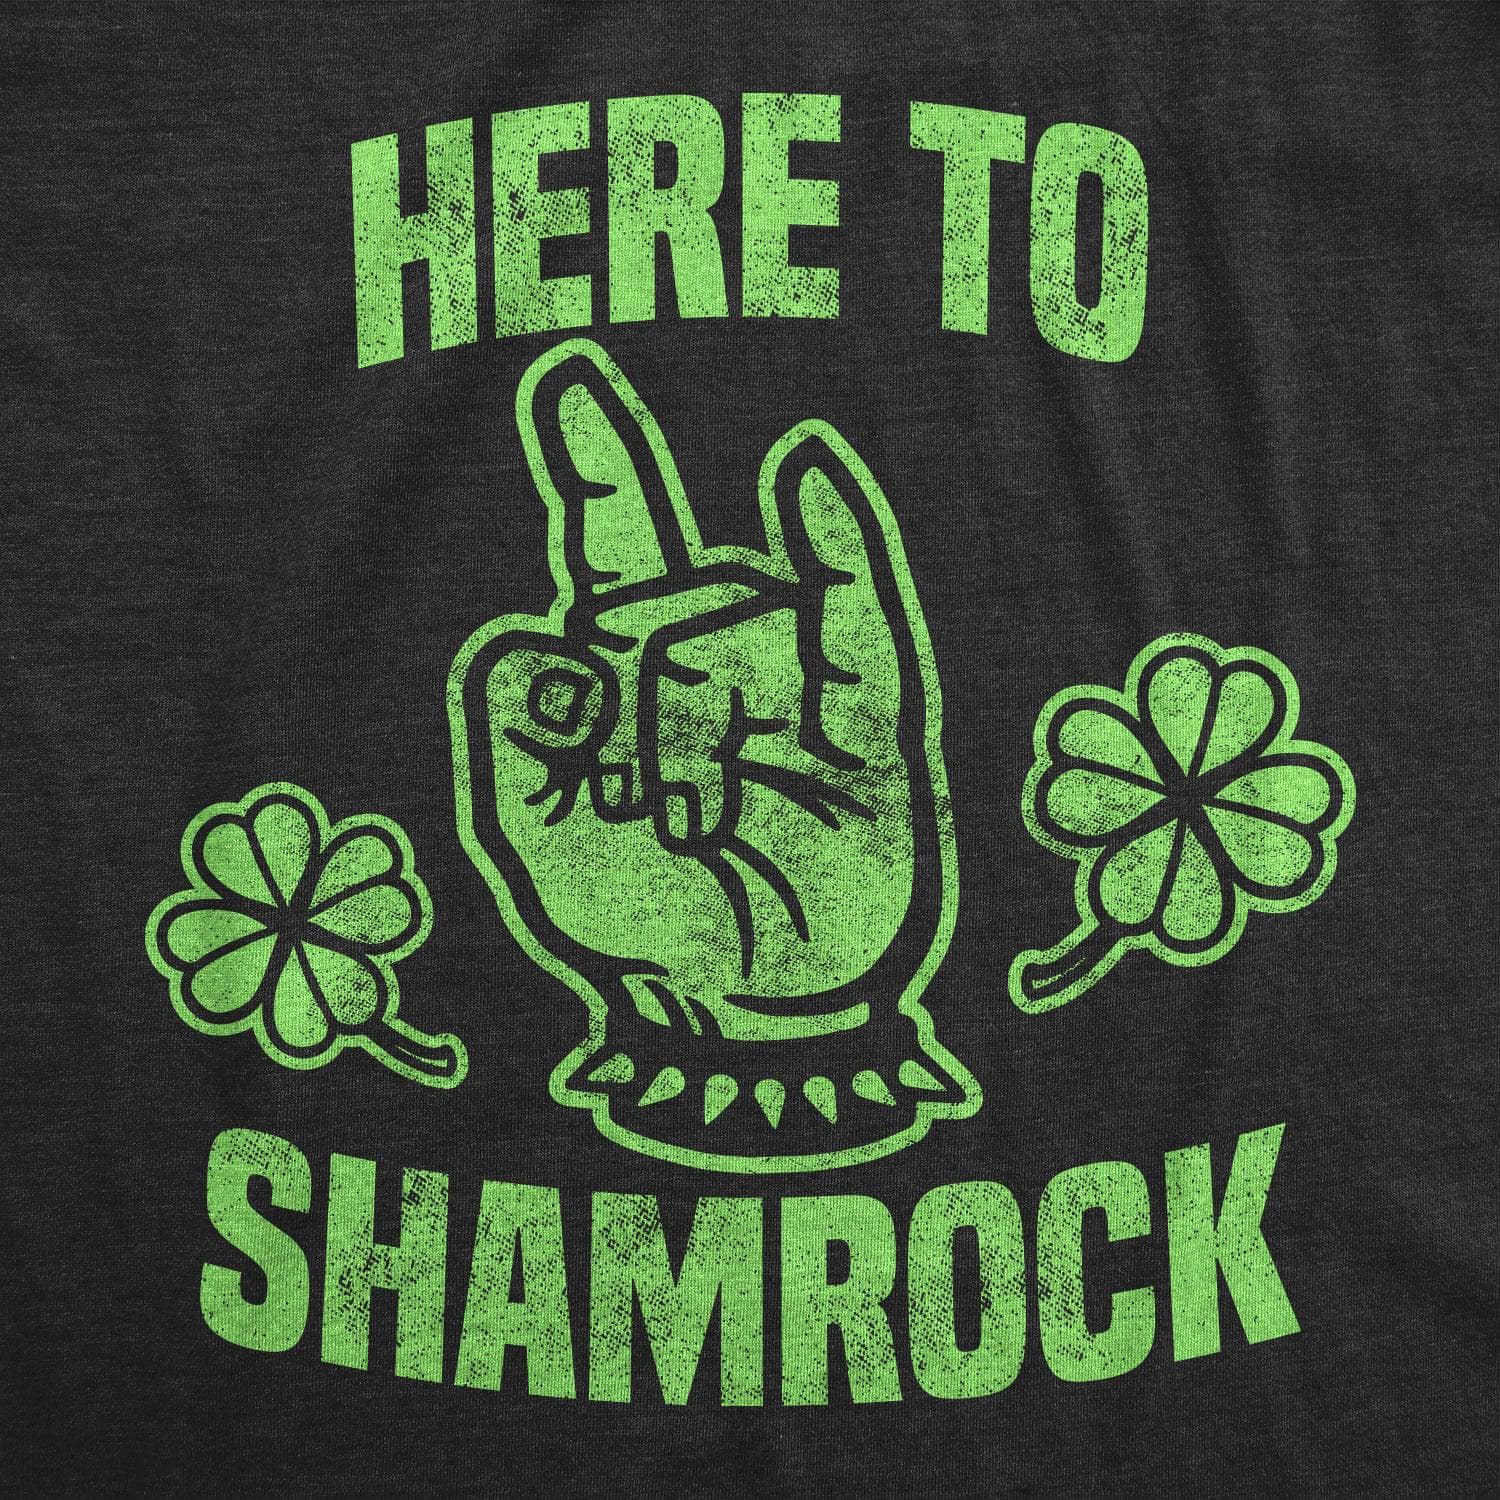 Here To Shamrock Men's Tshirt  -  Crazy Dog T-Shirts